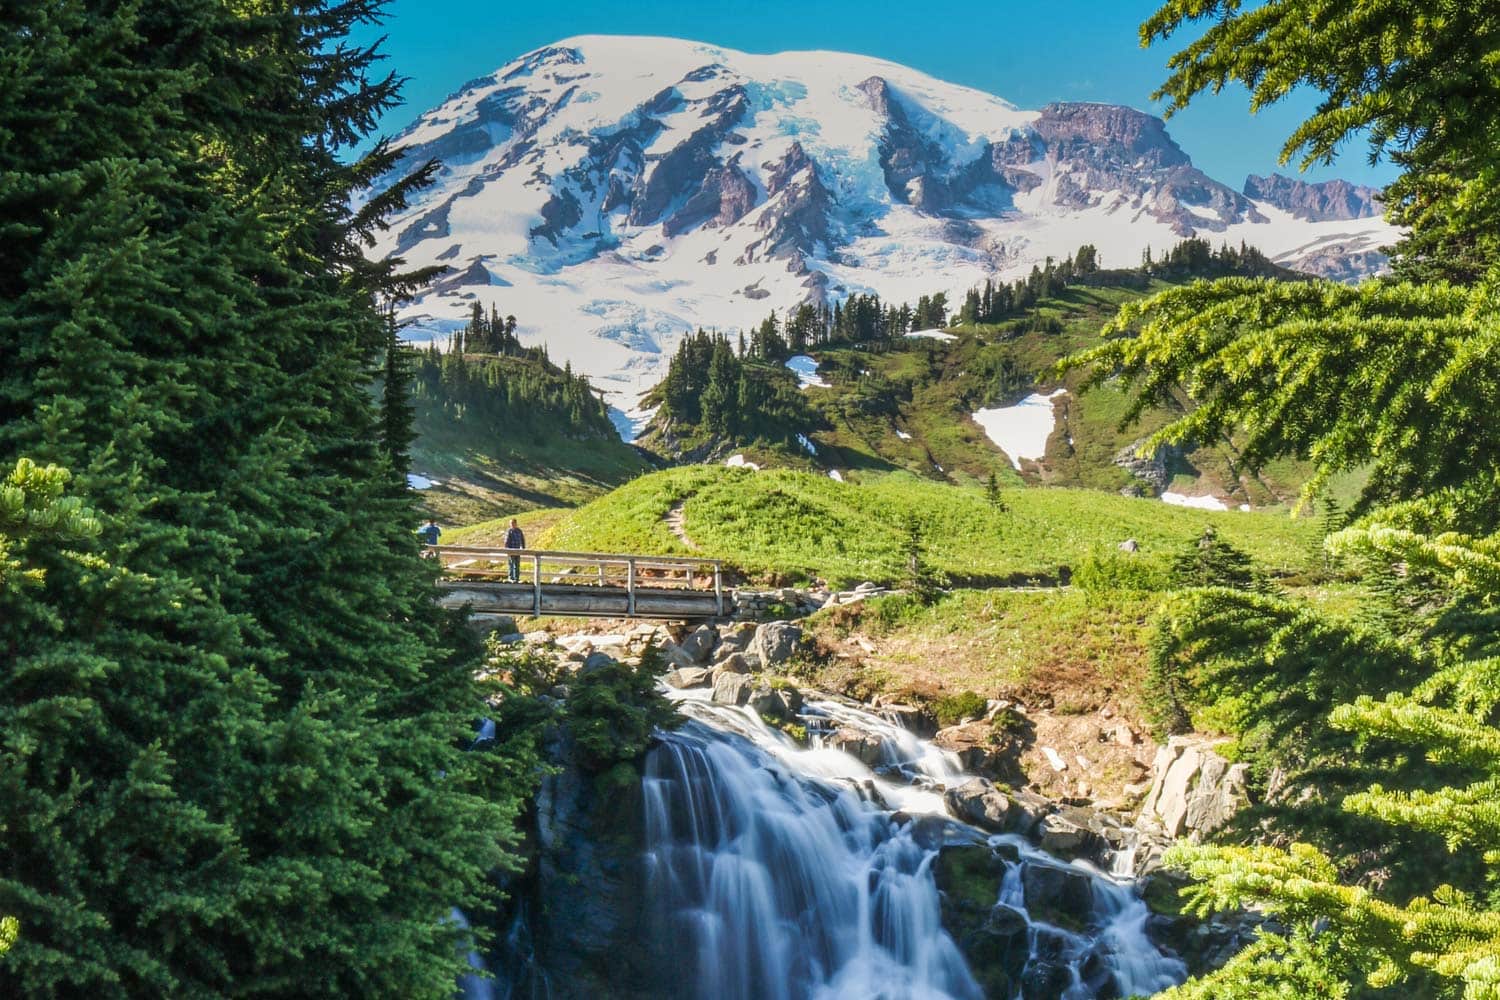 Myrtle Falls, Mount Rainier National Park Skyline Trail Loop, Washington - Pacific Northwest National Parks Road Trip